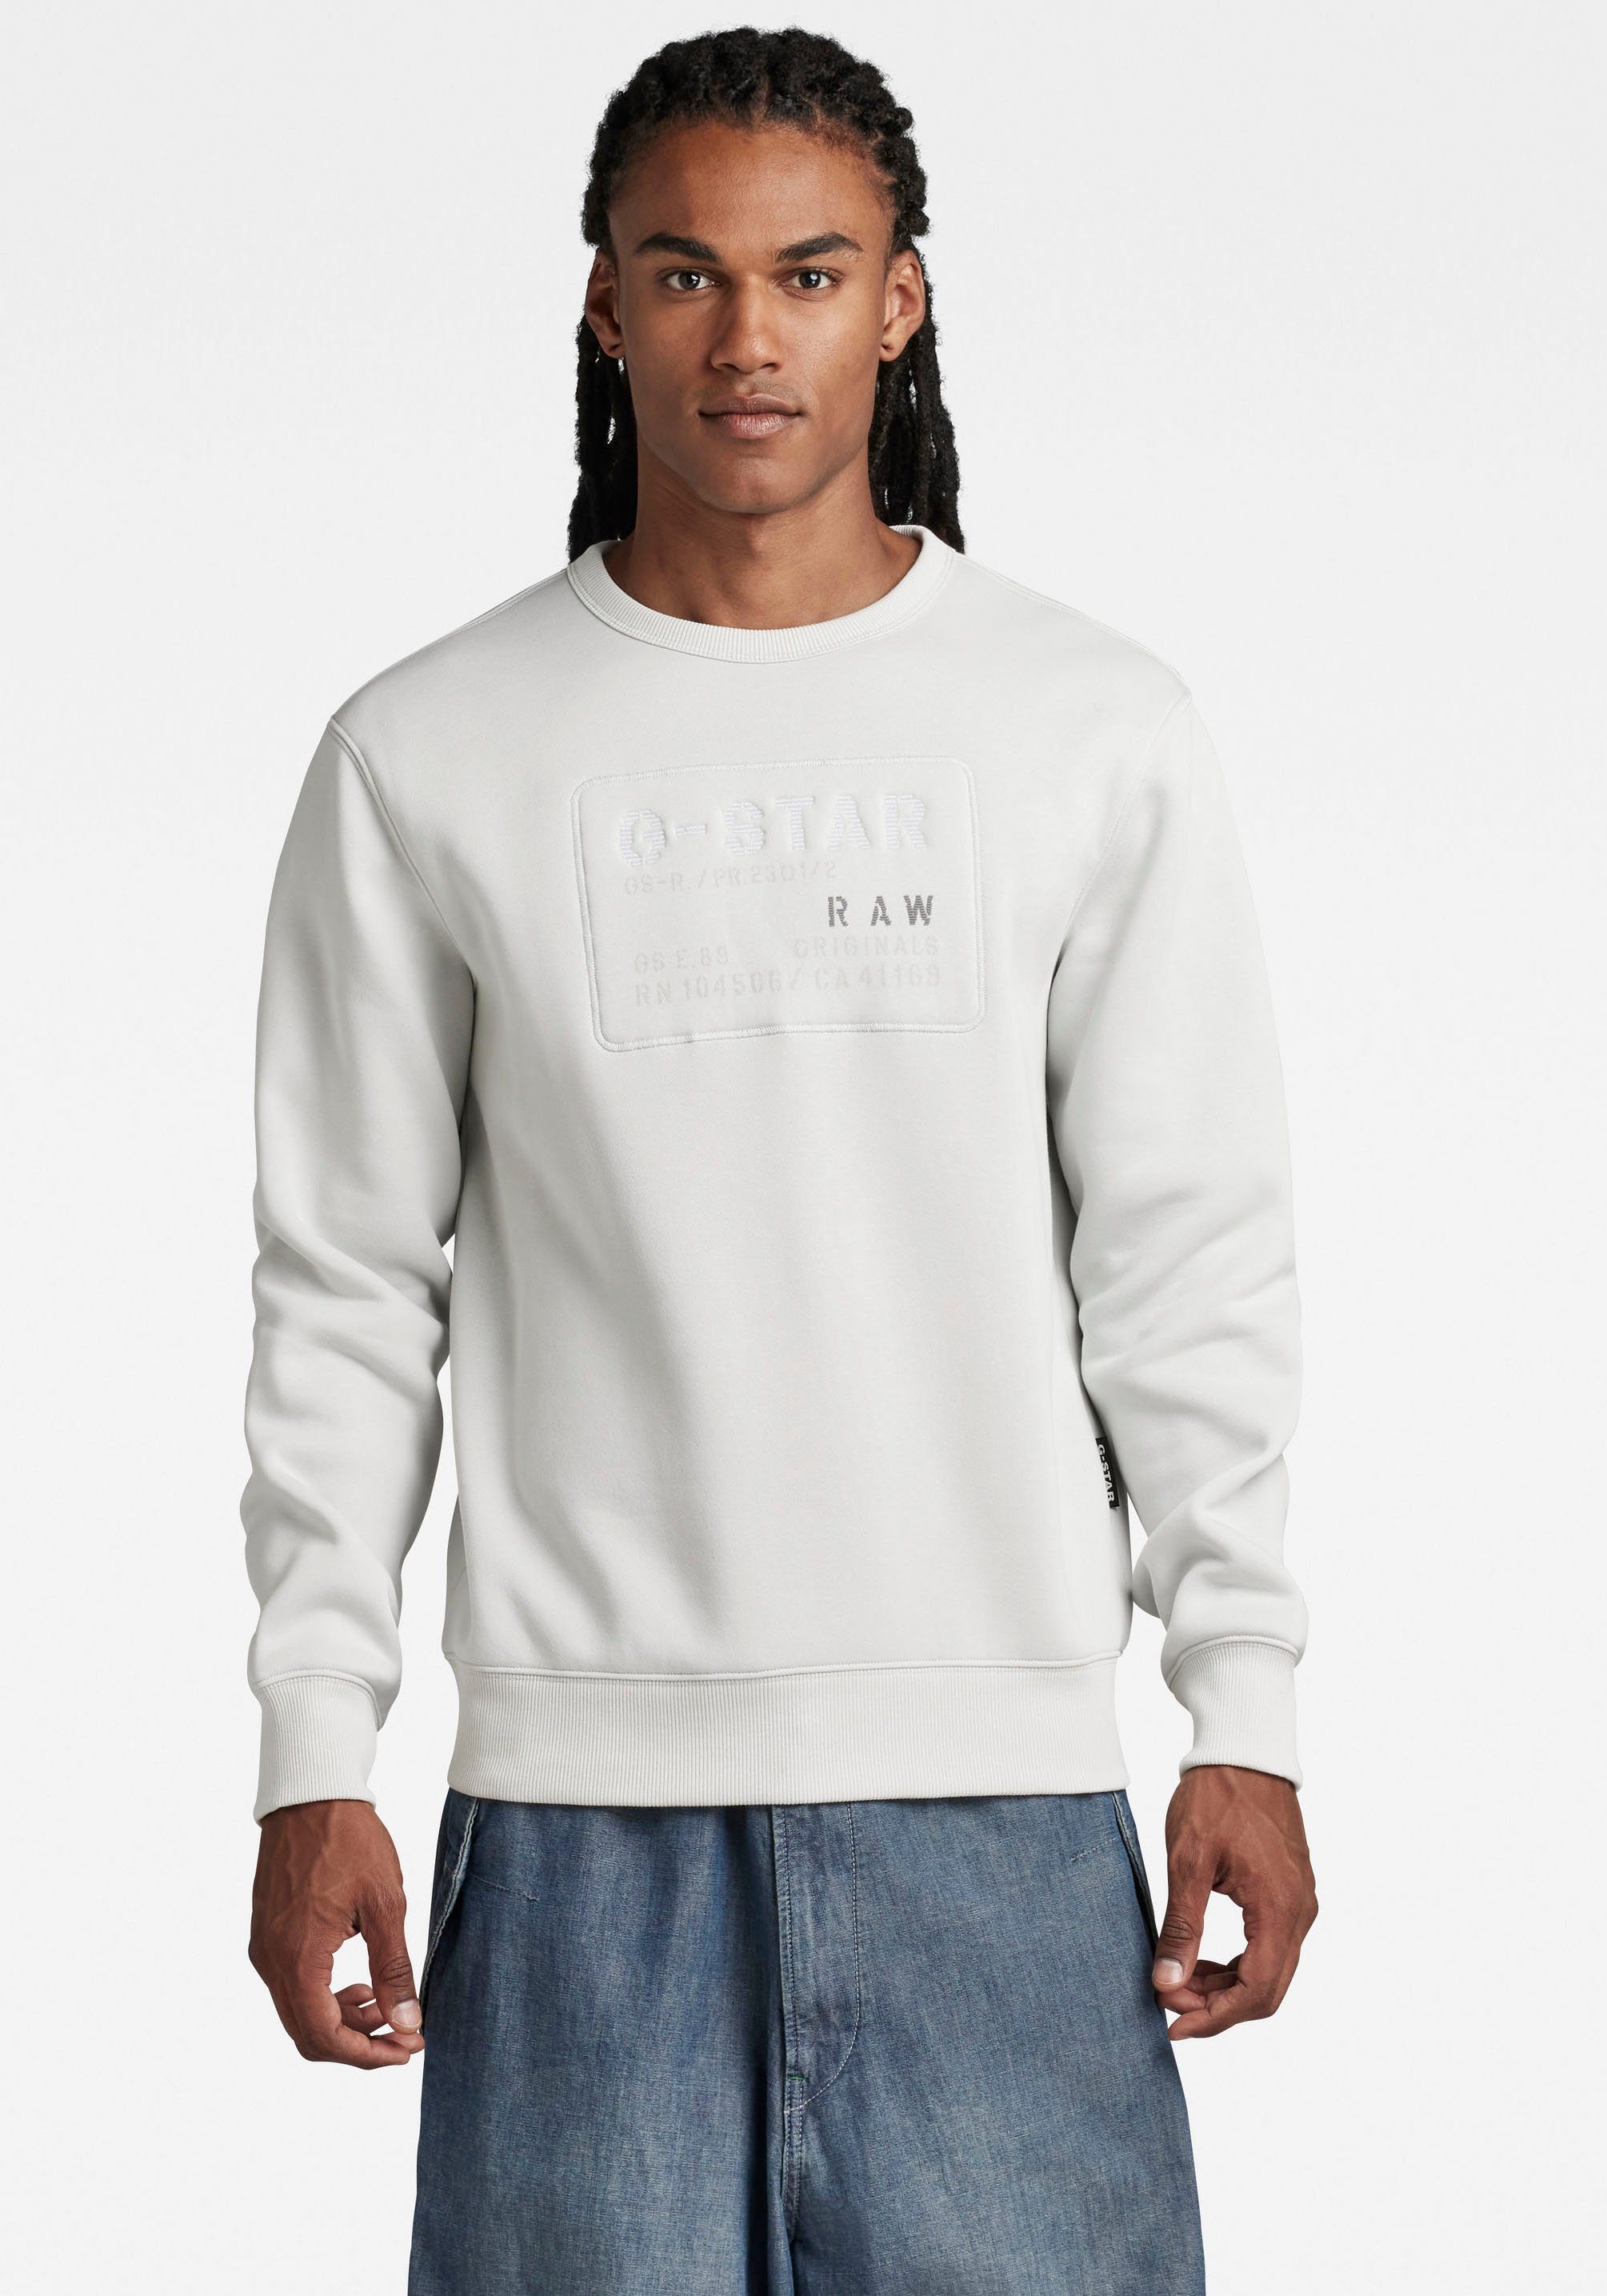 G-Star RAW Sweatshirt Sweatshirt Originals Oyster mushroom